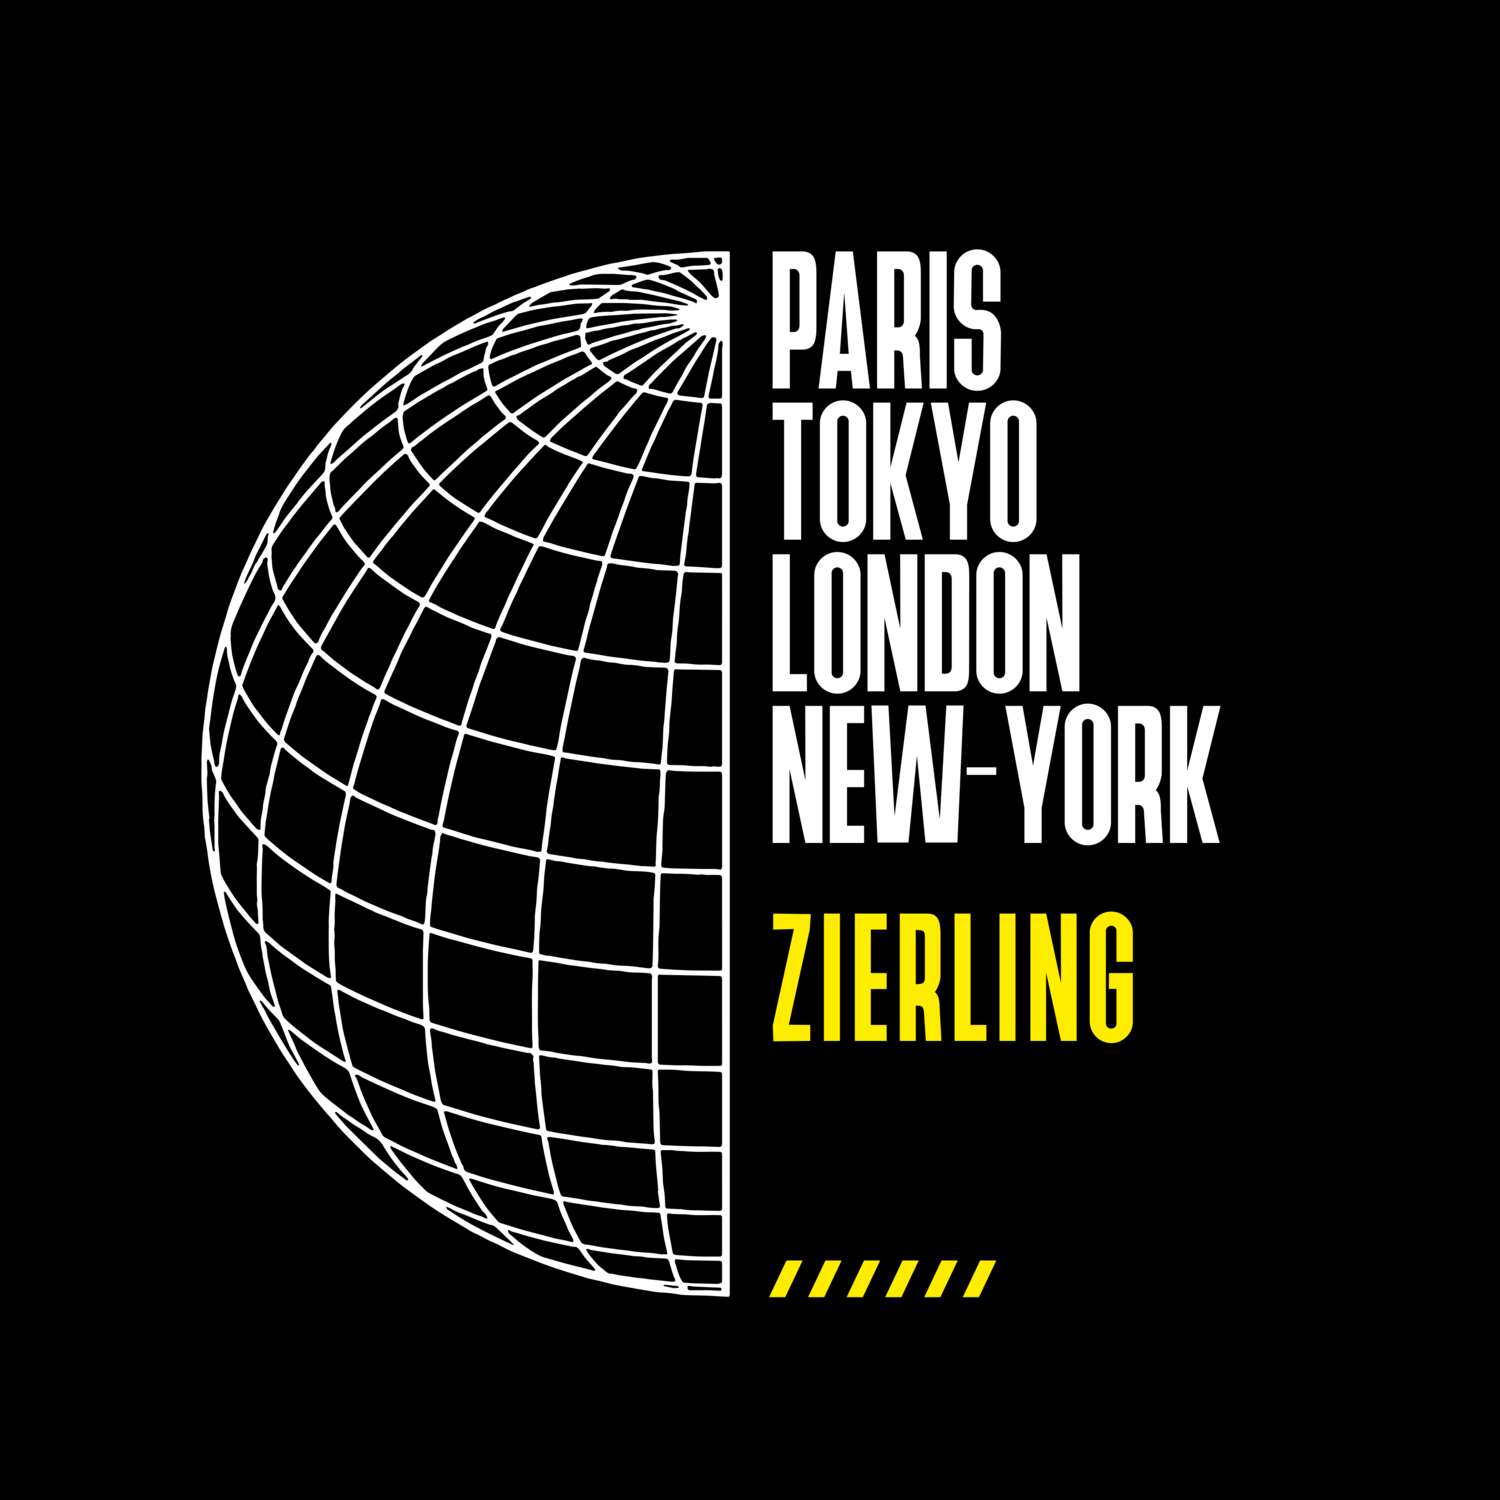 Zierling T-Shirt »Paris Tokyo London«